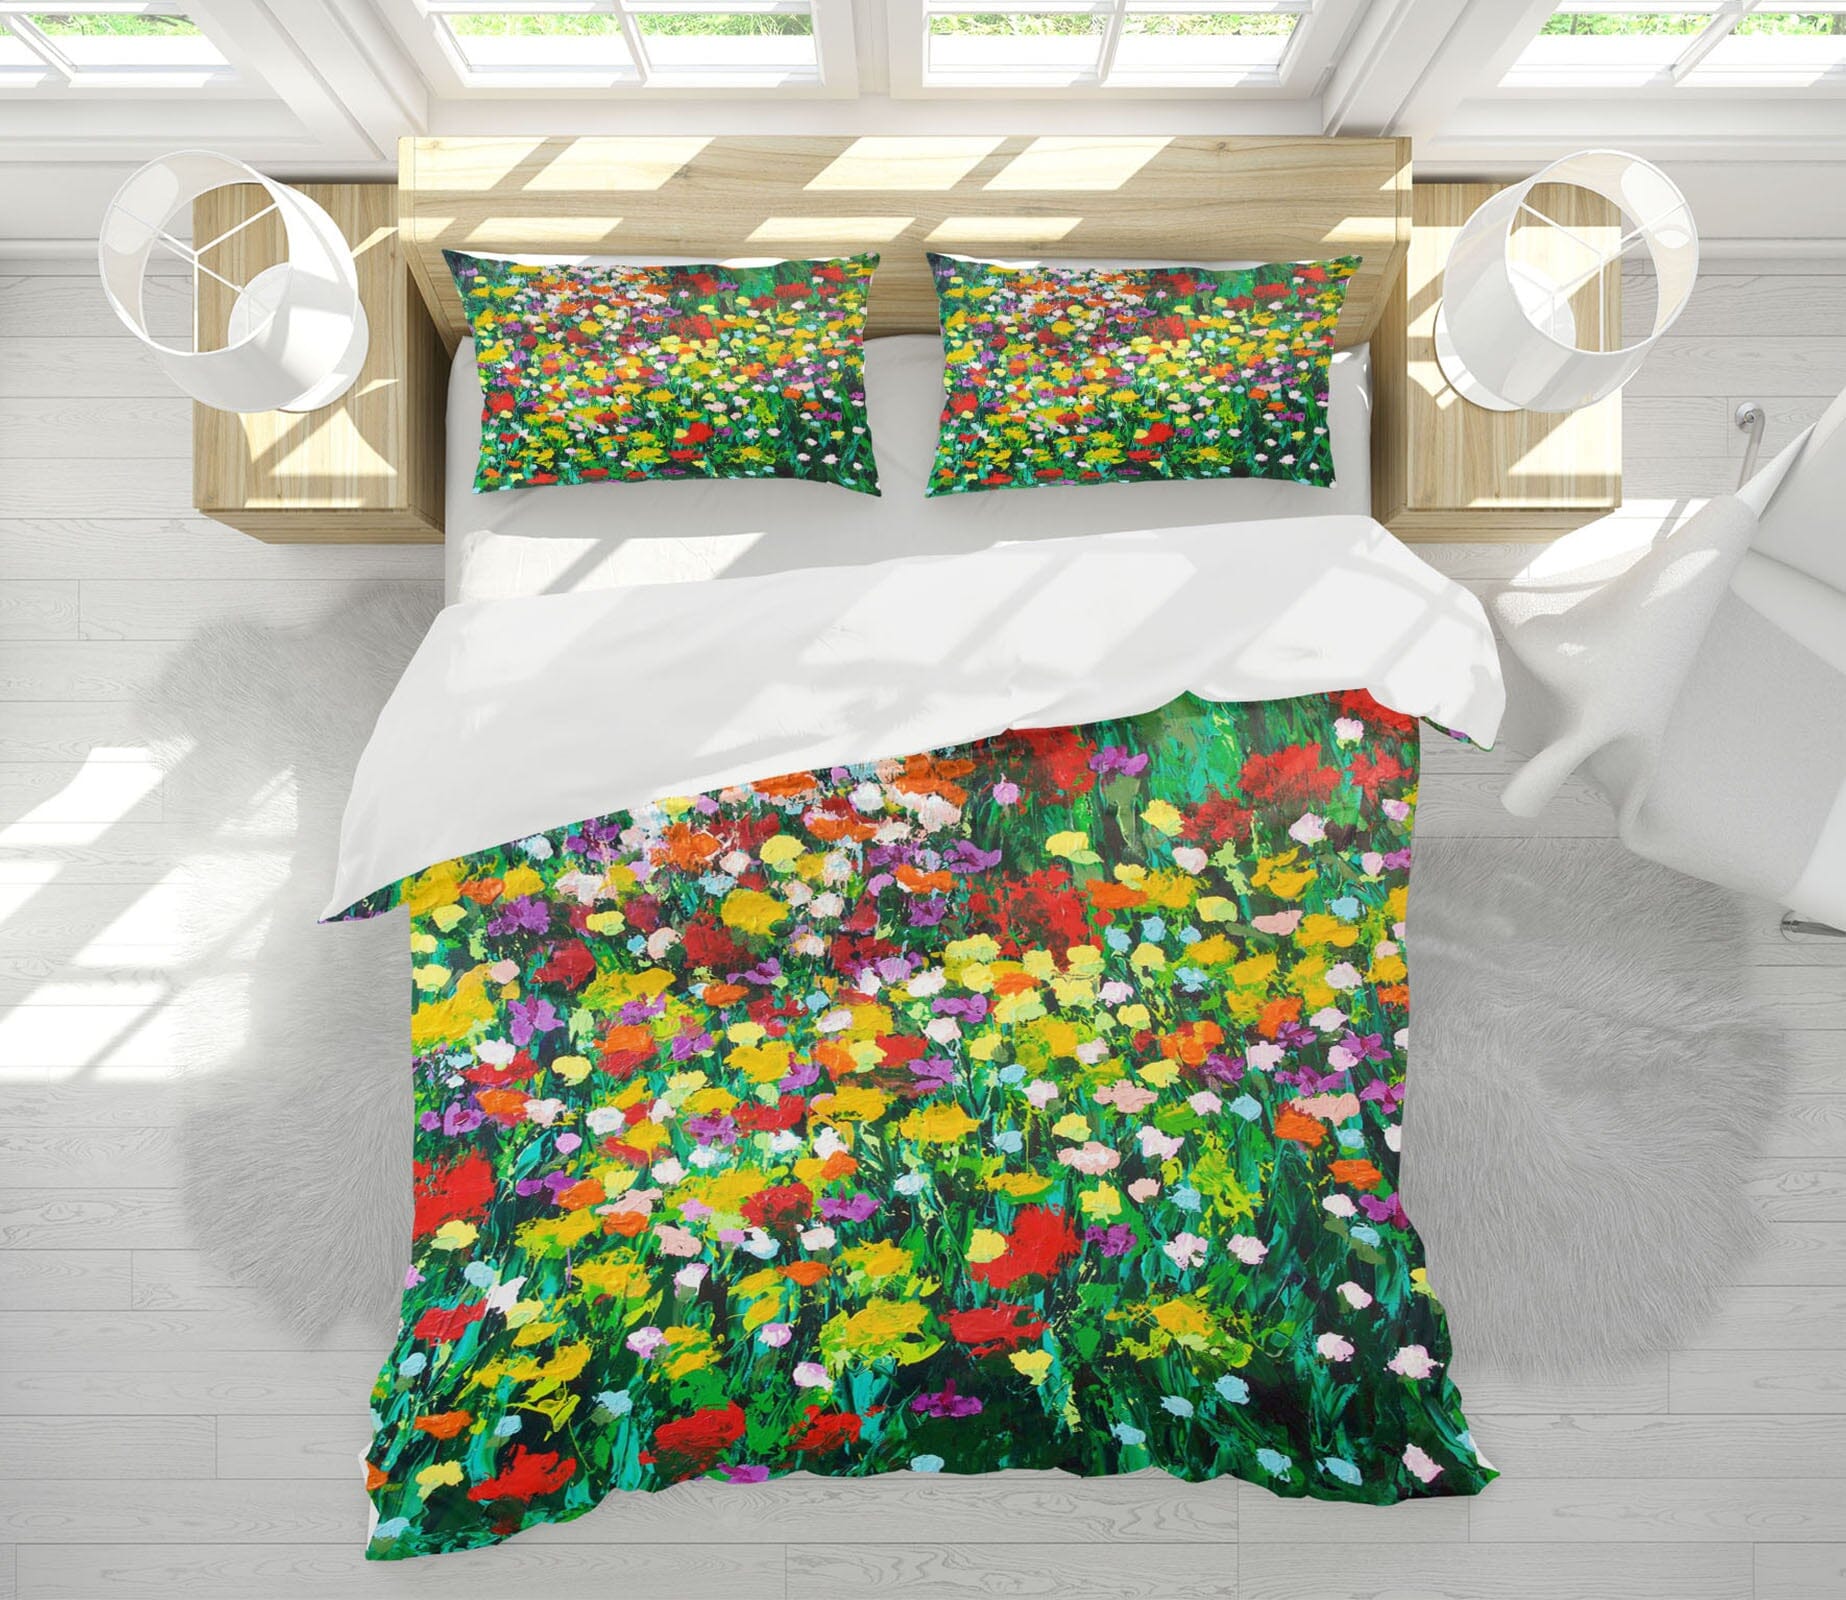 3D Floral Ocean 2018 Allan P. Friedlander Bedding Bed Pillowcases Quilt Quiet Covers AJ Creativity Home 